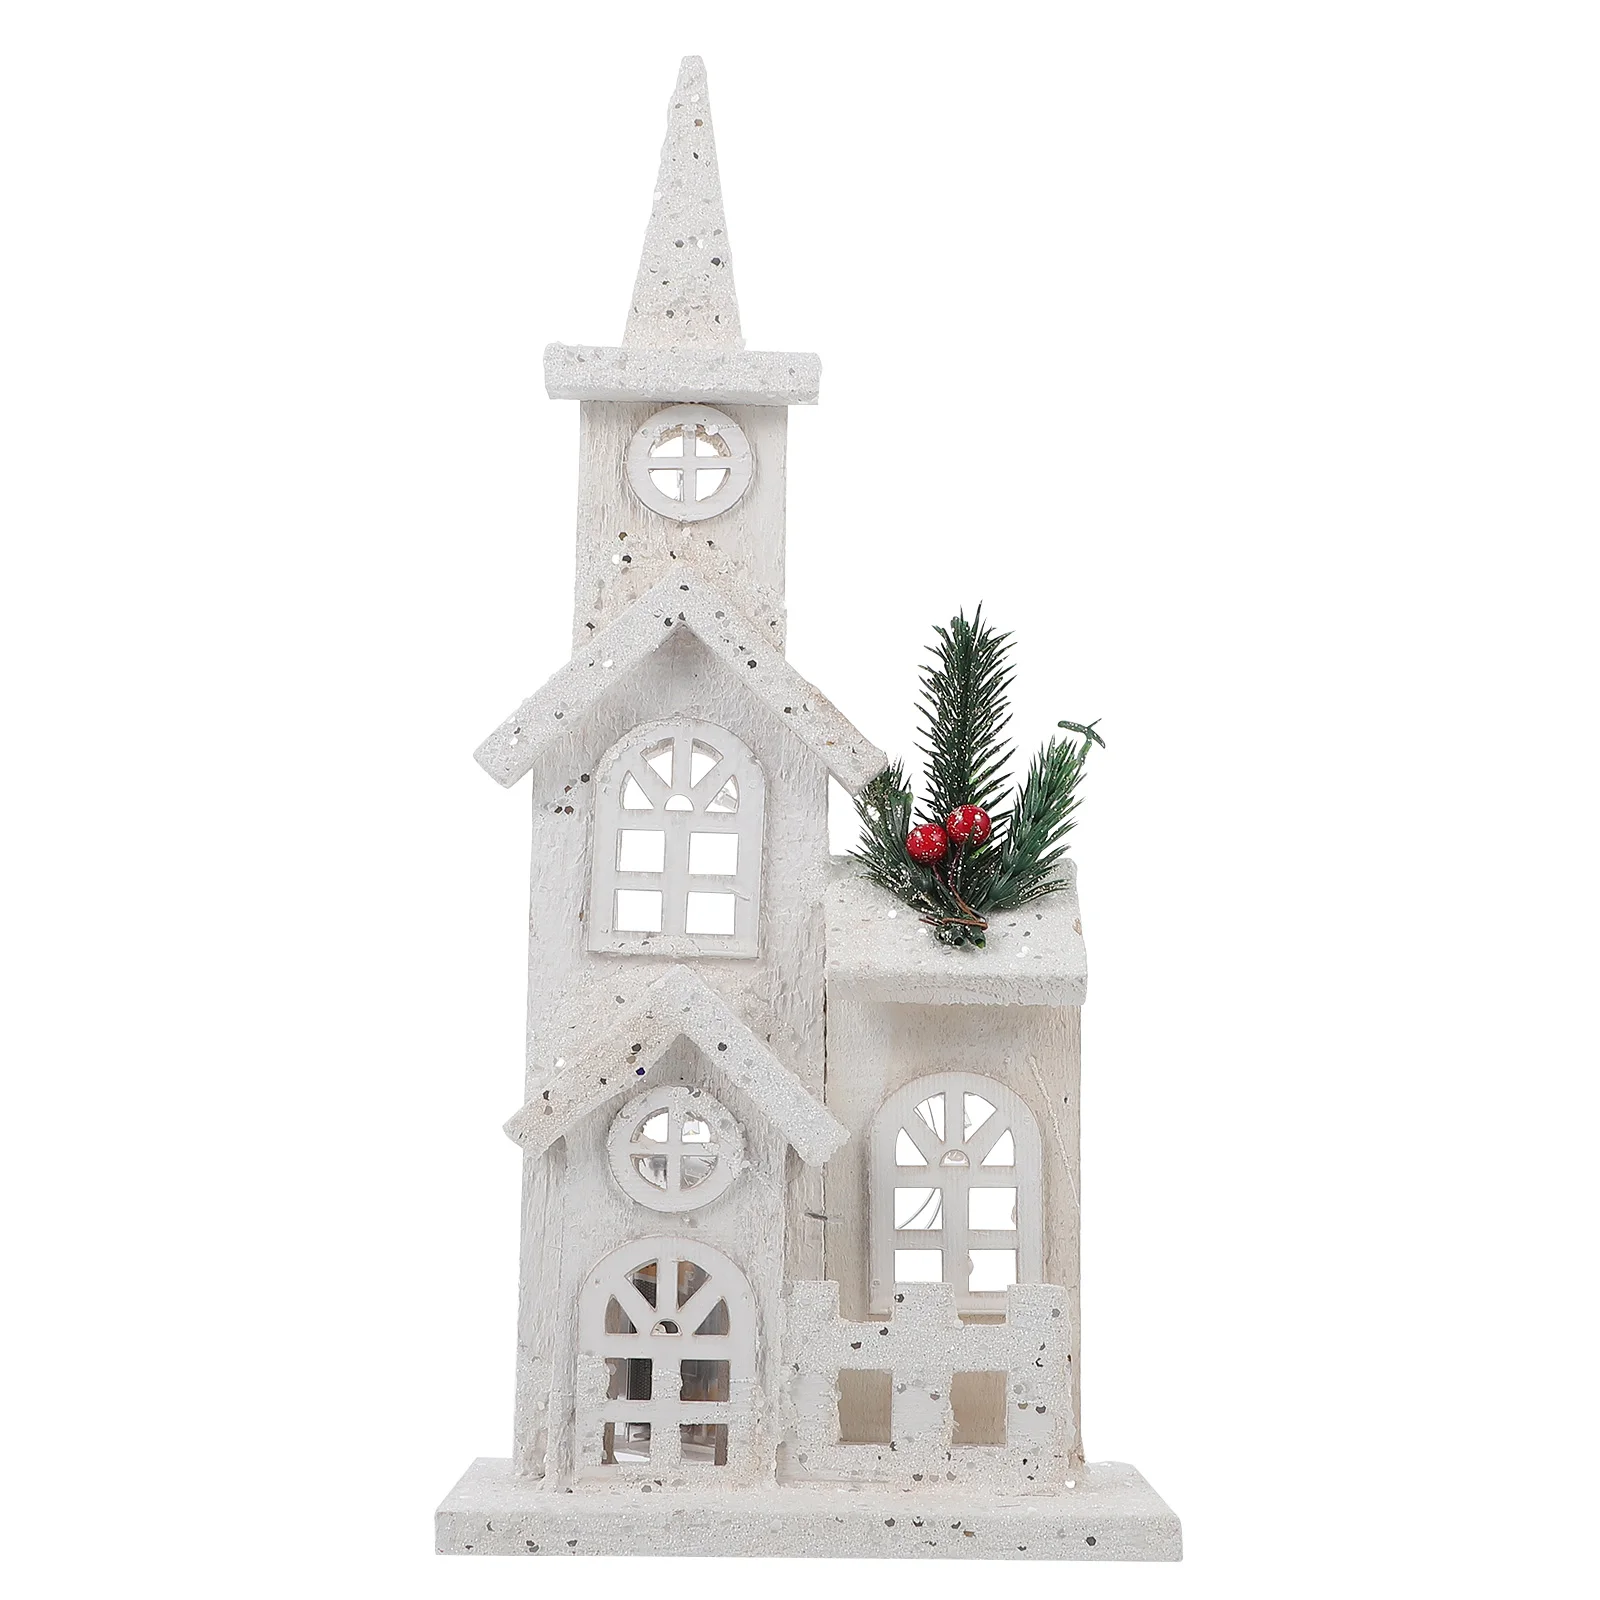 

Christmas House Mini Home Desktop Adorn Chic Xmas Decor Crafts Wood Decorative Showcase Ornament Adornment Child